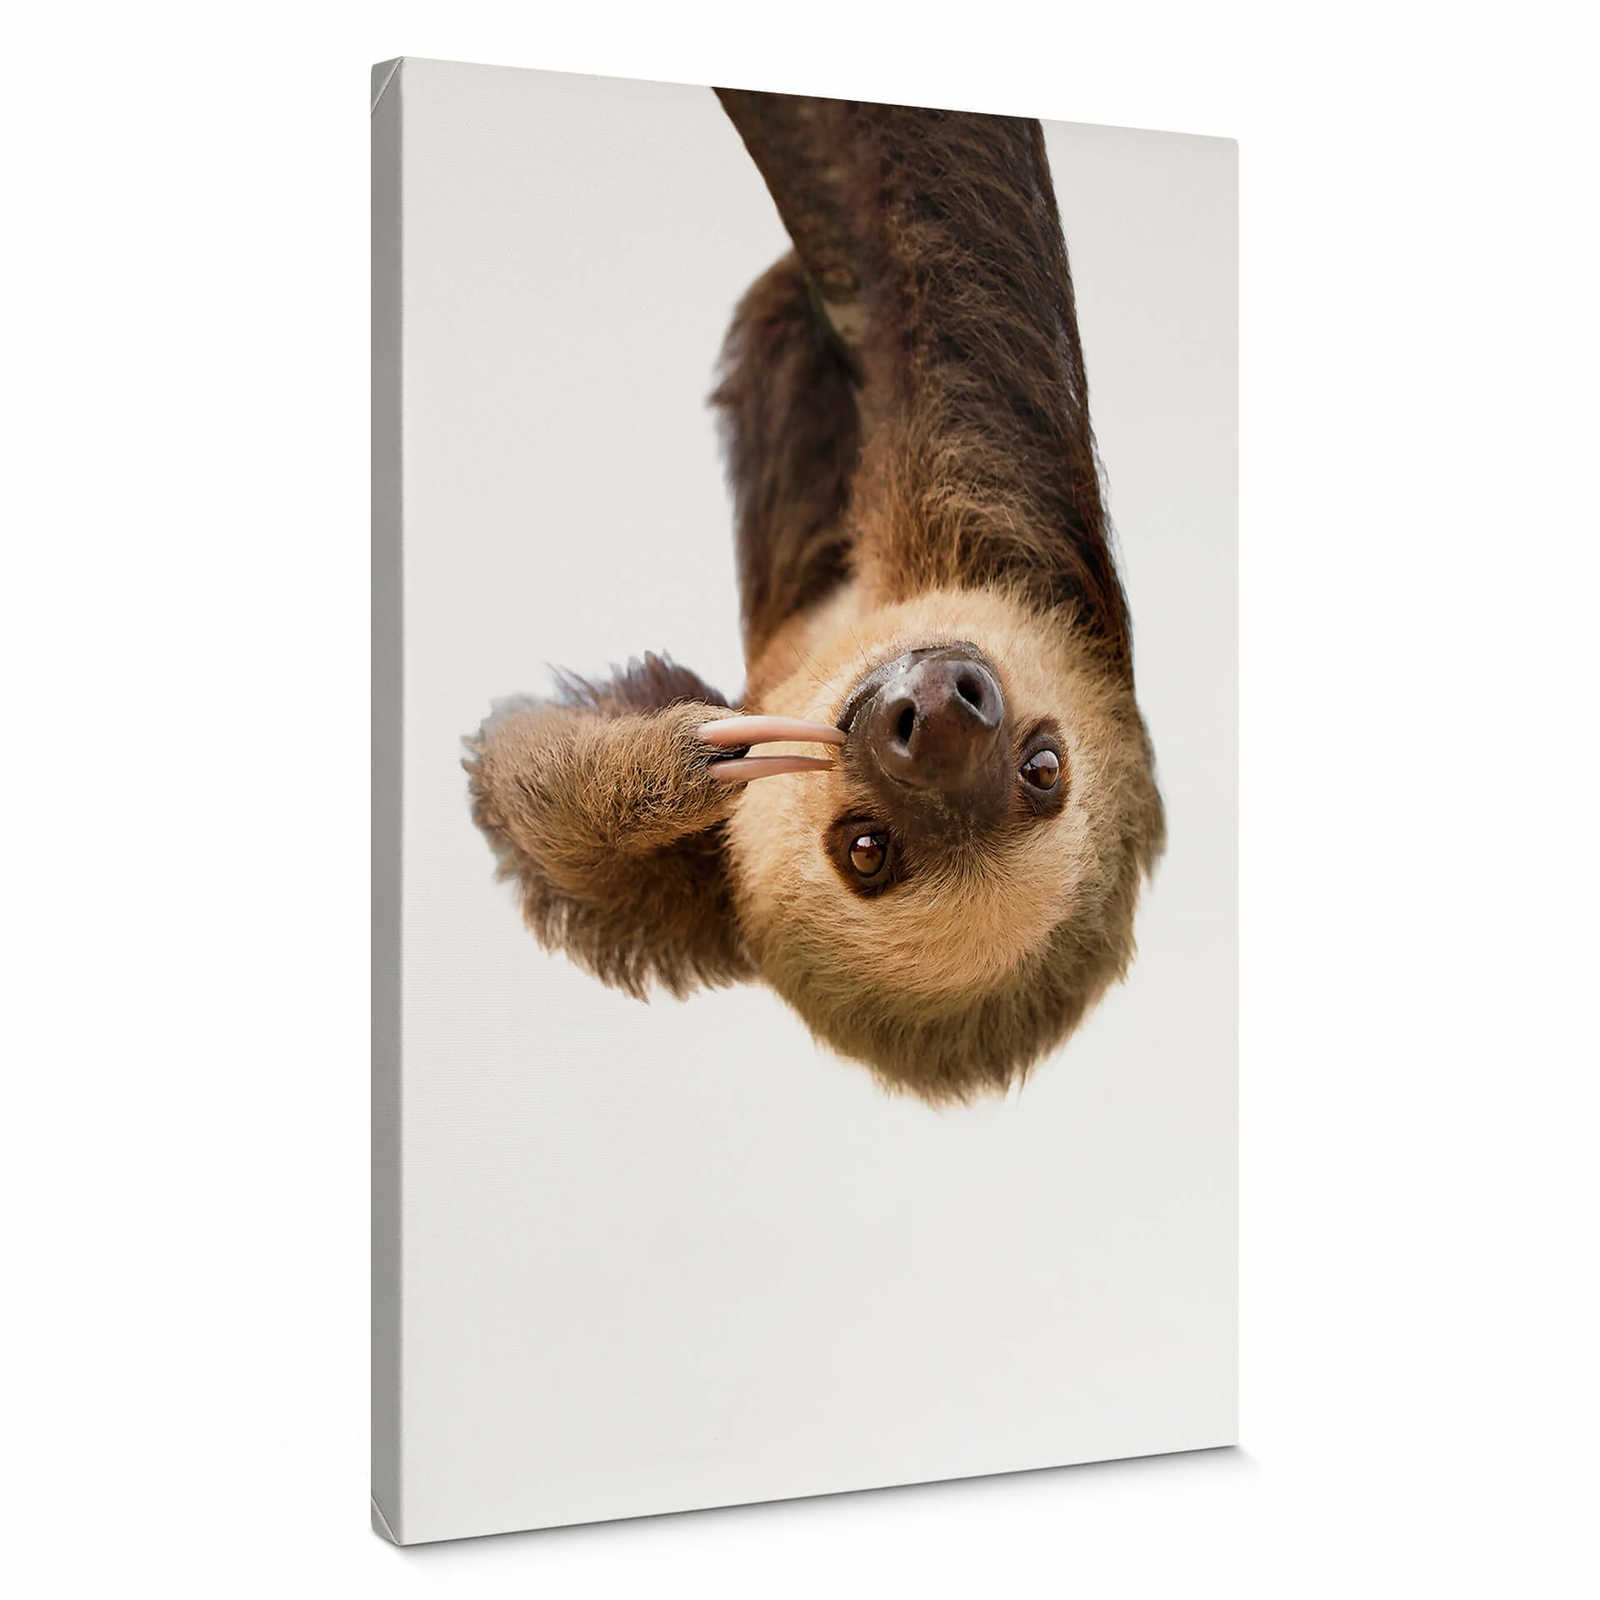         Canvas print sloth hanging upside down
    